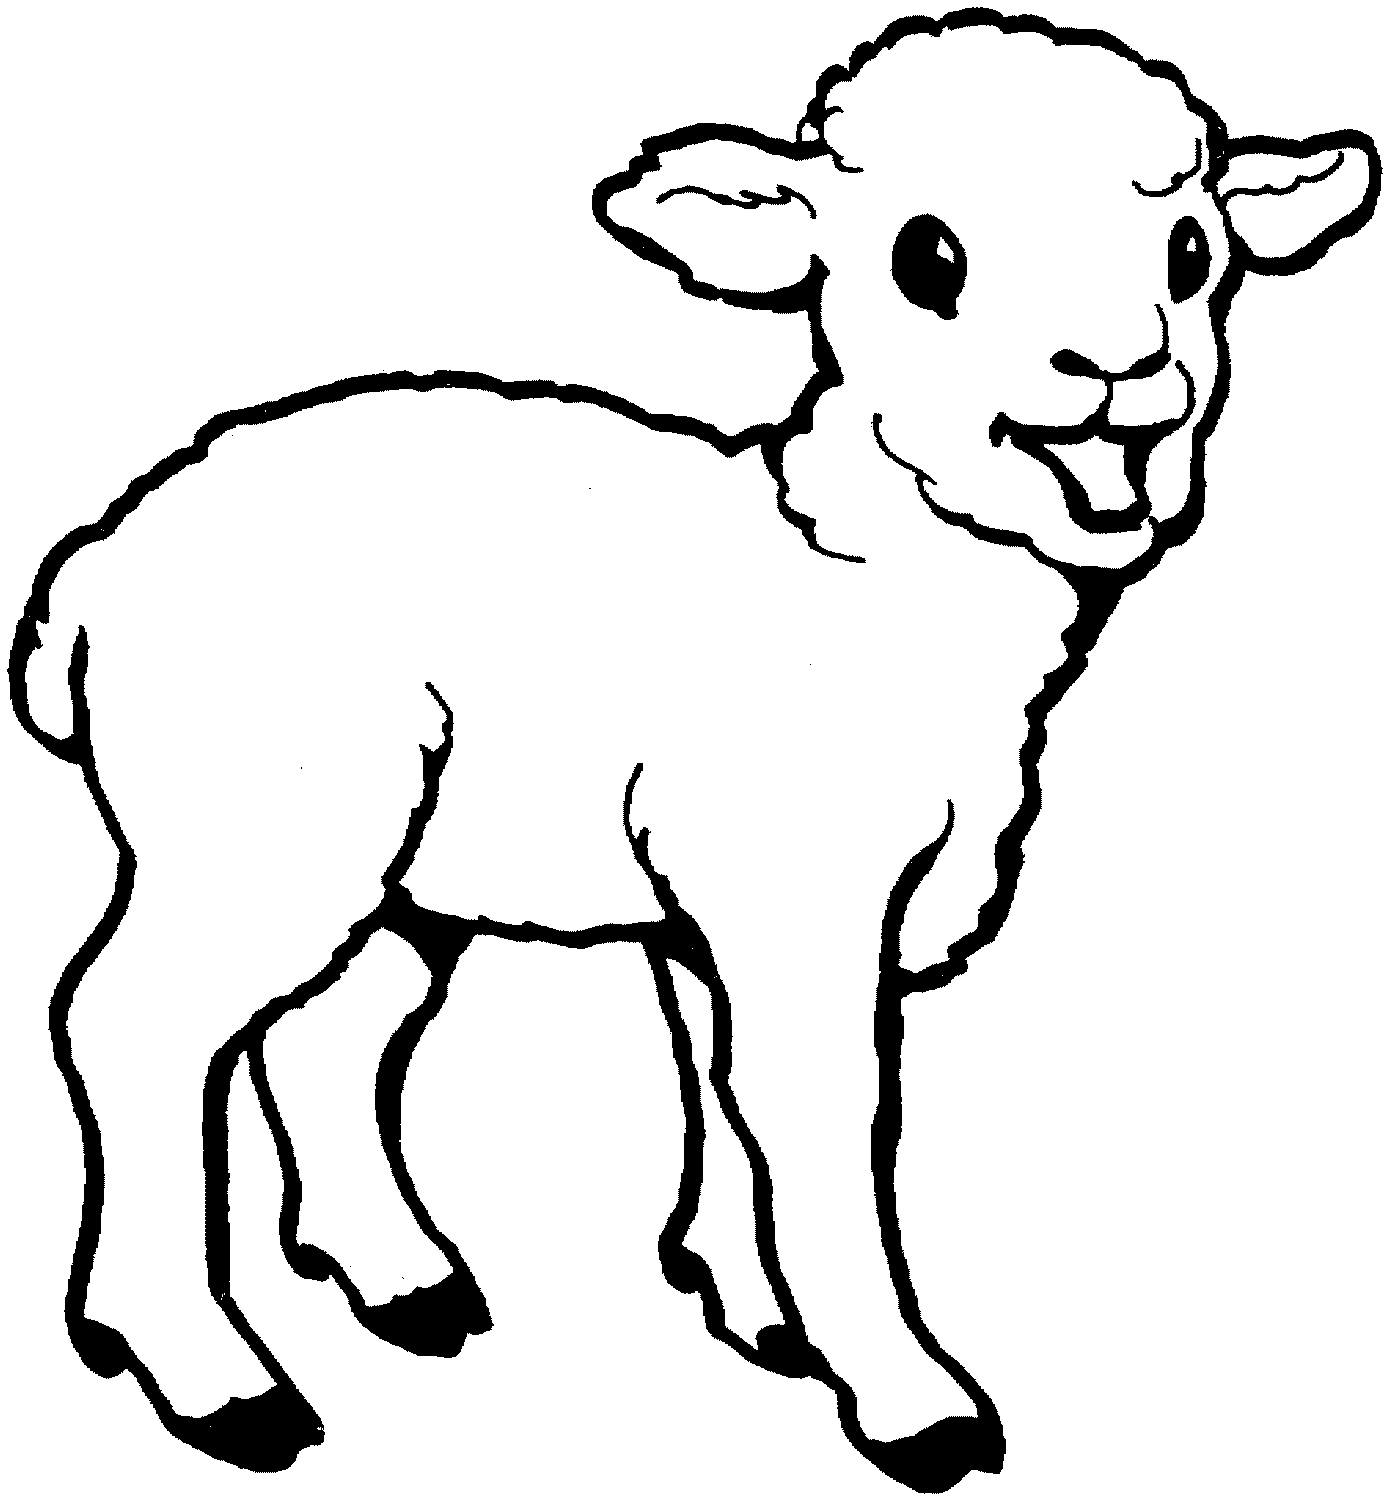 sheep printable redirecting to httpwwwsheknowscomparentingslideshow sheep printable 